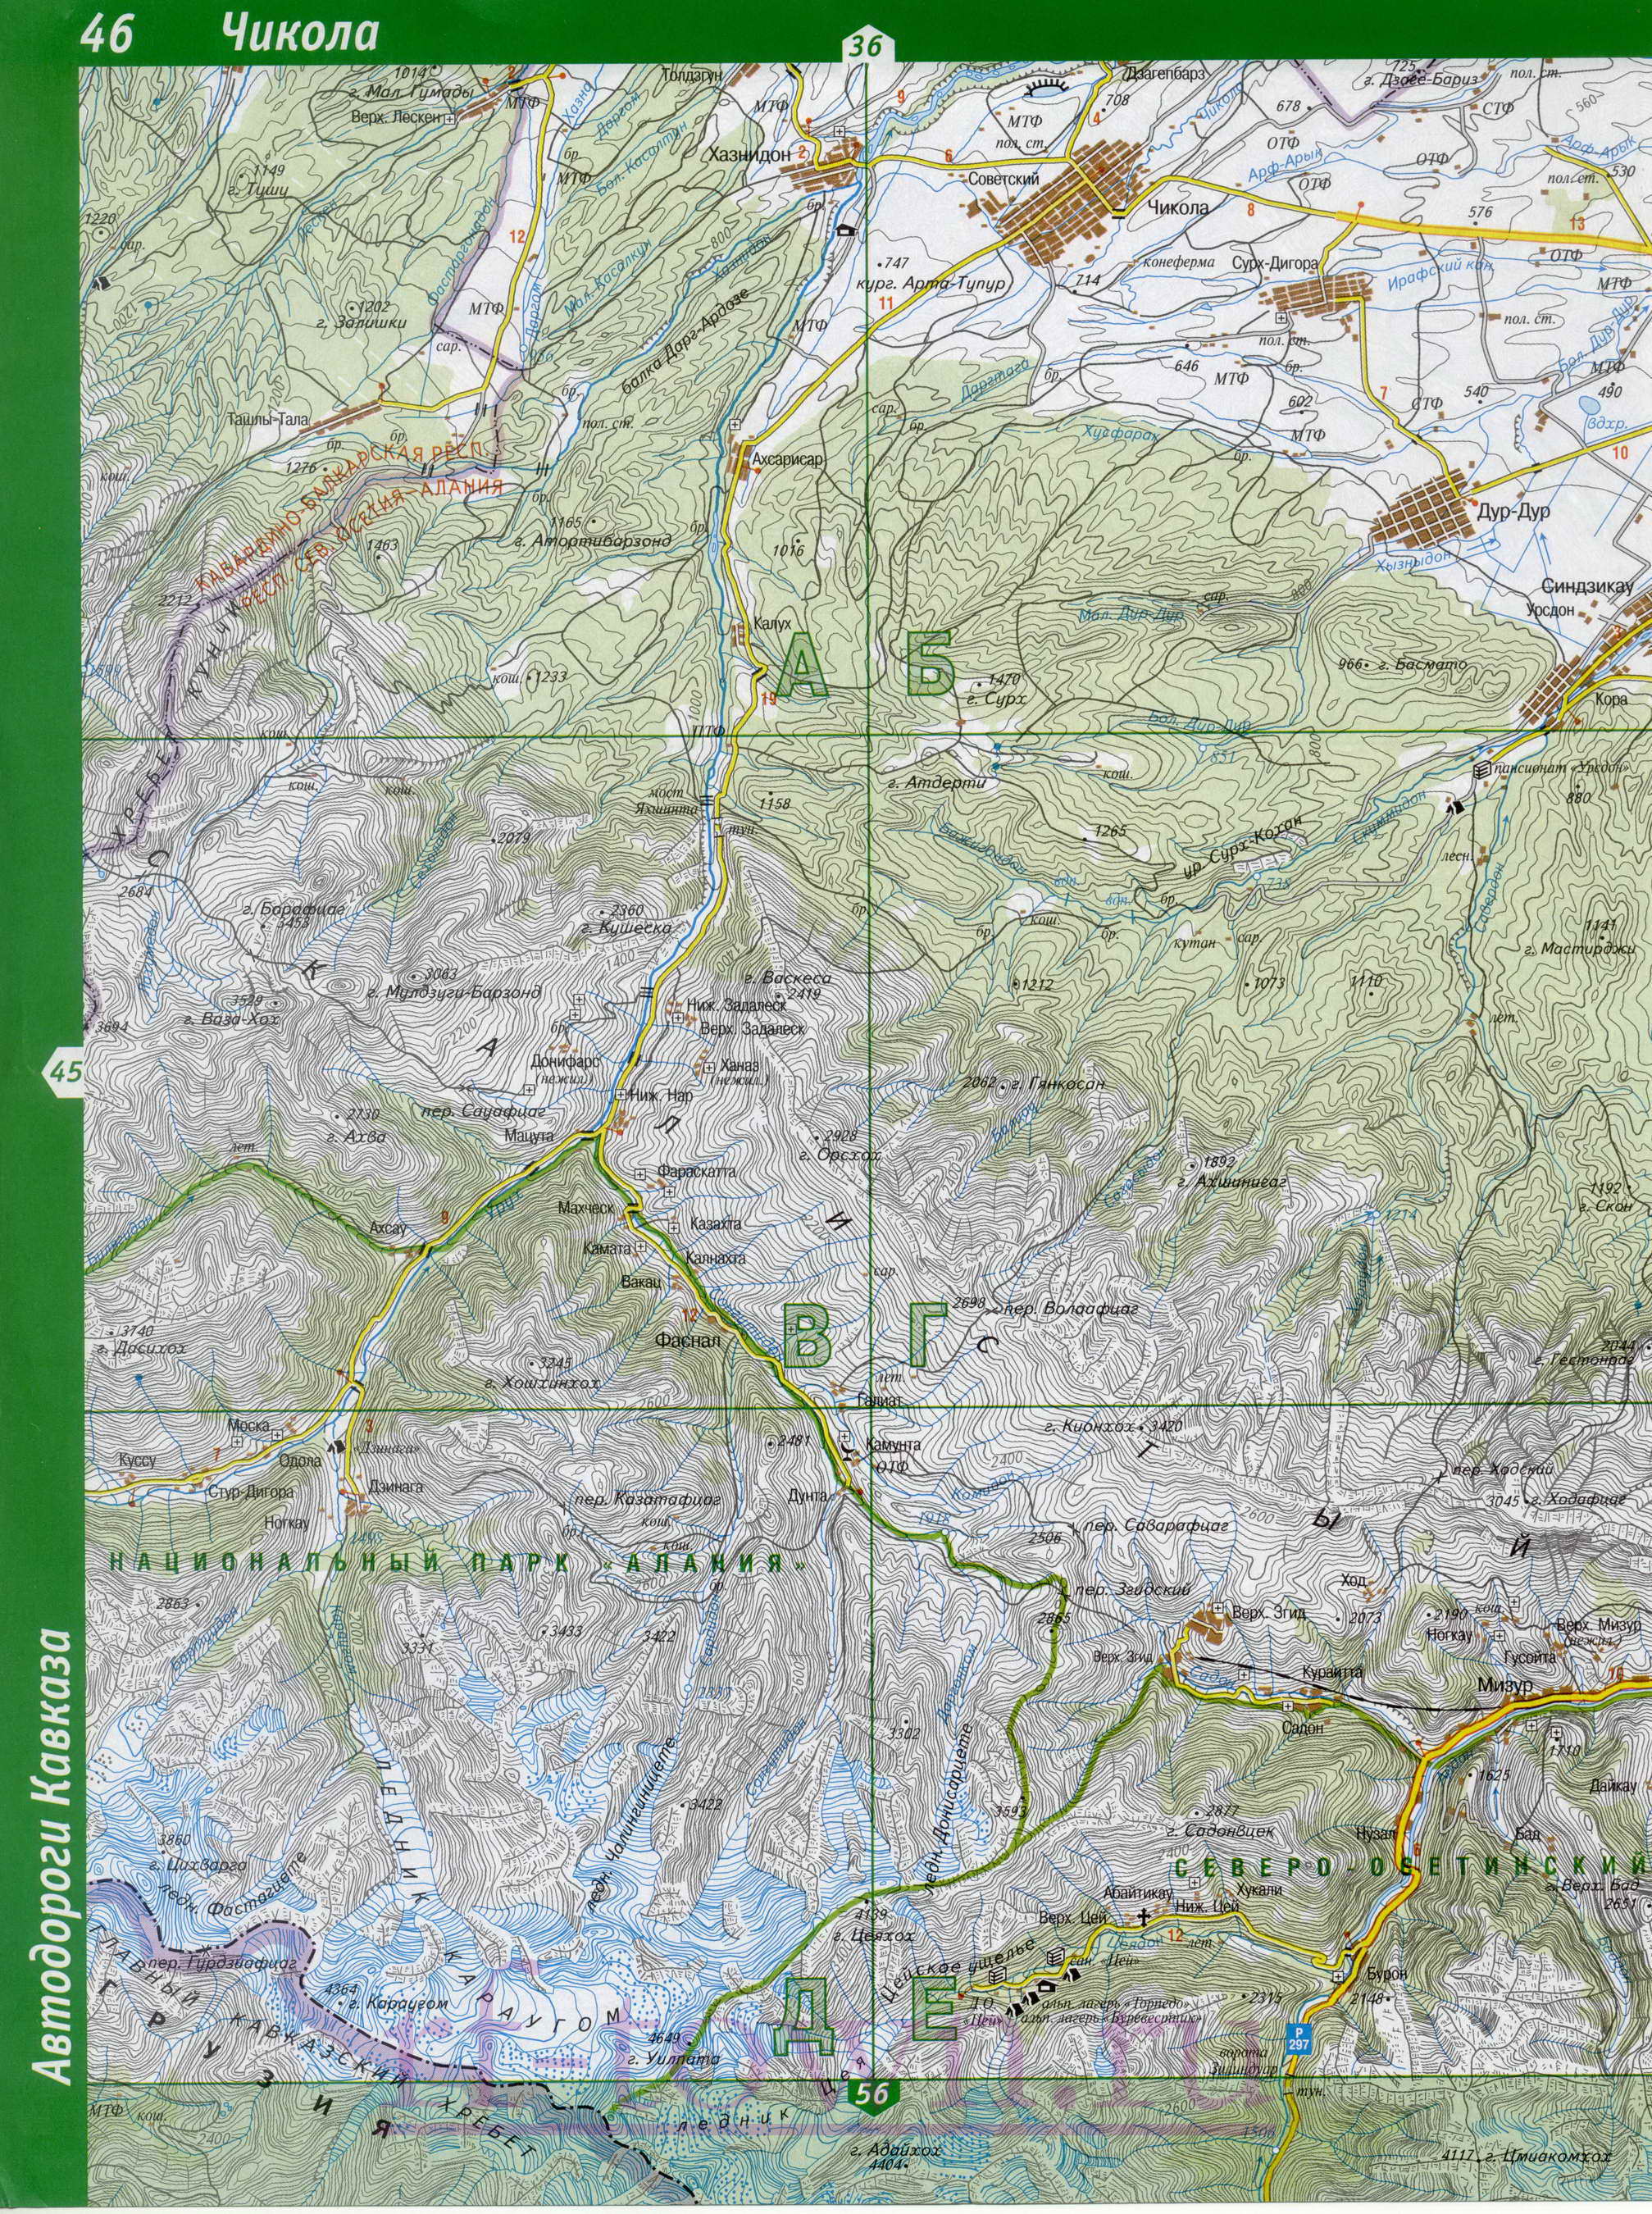 Карта Кабардино-Балкарии. Подробная топографическая карта Кабардино-Балкарии. Карта Кабардино-Балкарии масштаба 1см:2км, C2 - 